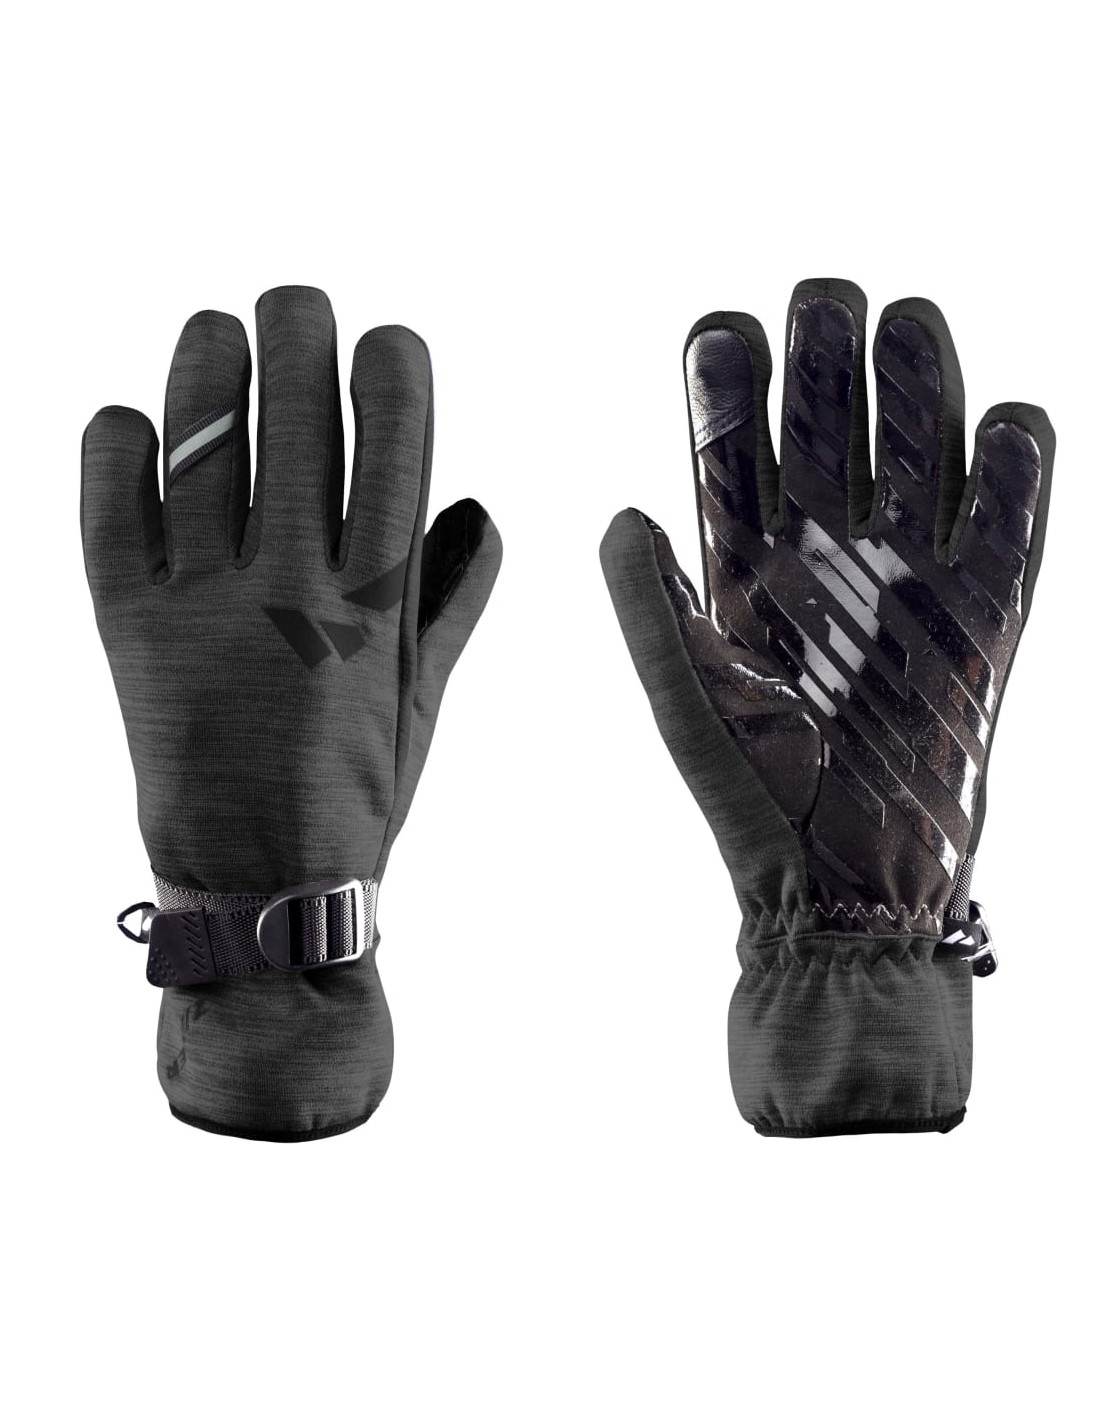 Zanier Handschuhe HIKE Handschuhfarbe - Schwarz, Handschuhvariante - Handschuhe, Handschuhgröße - 6.5, von Zanier-Gloves